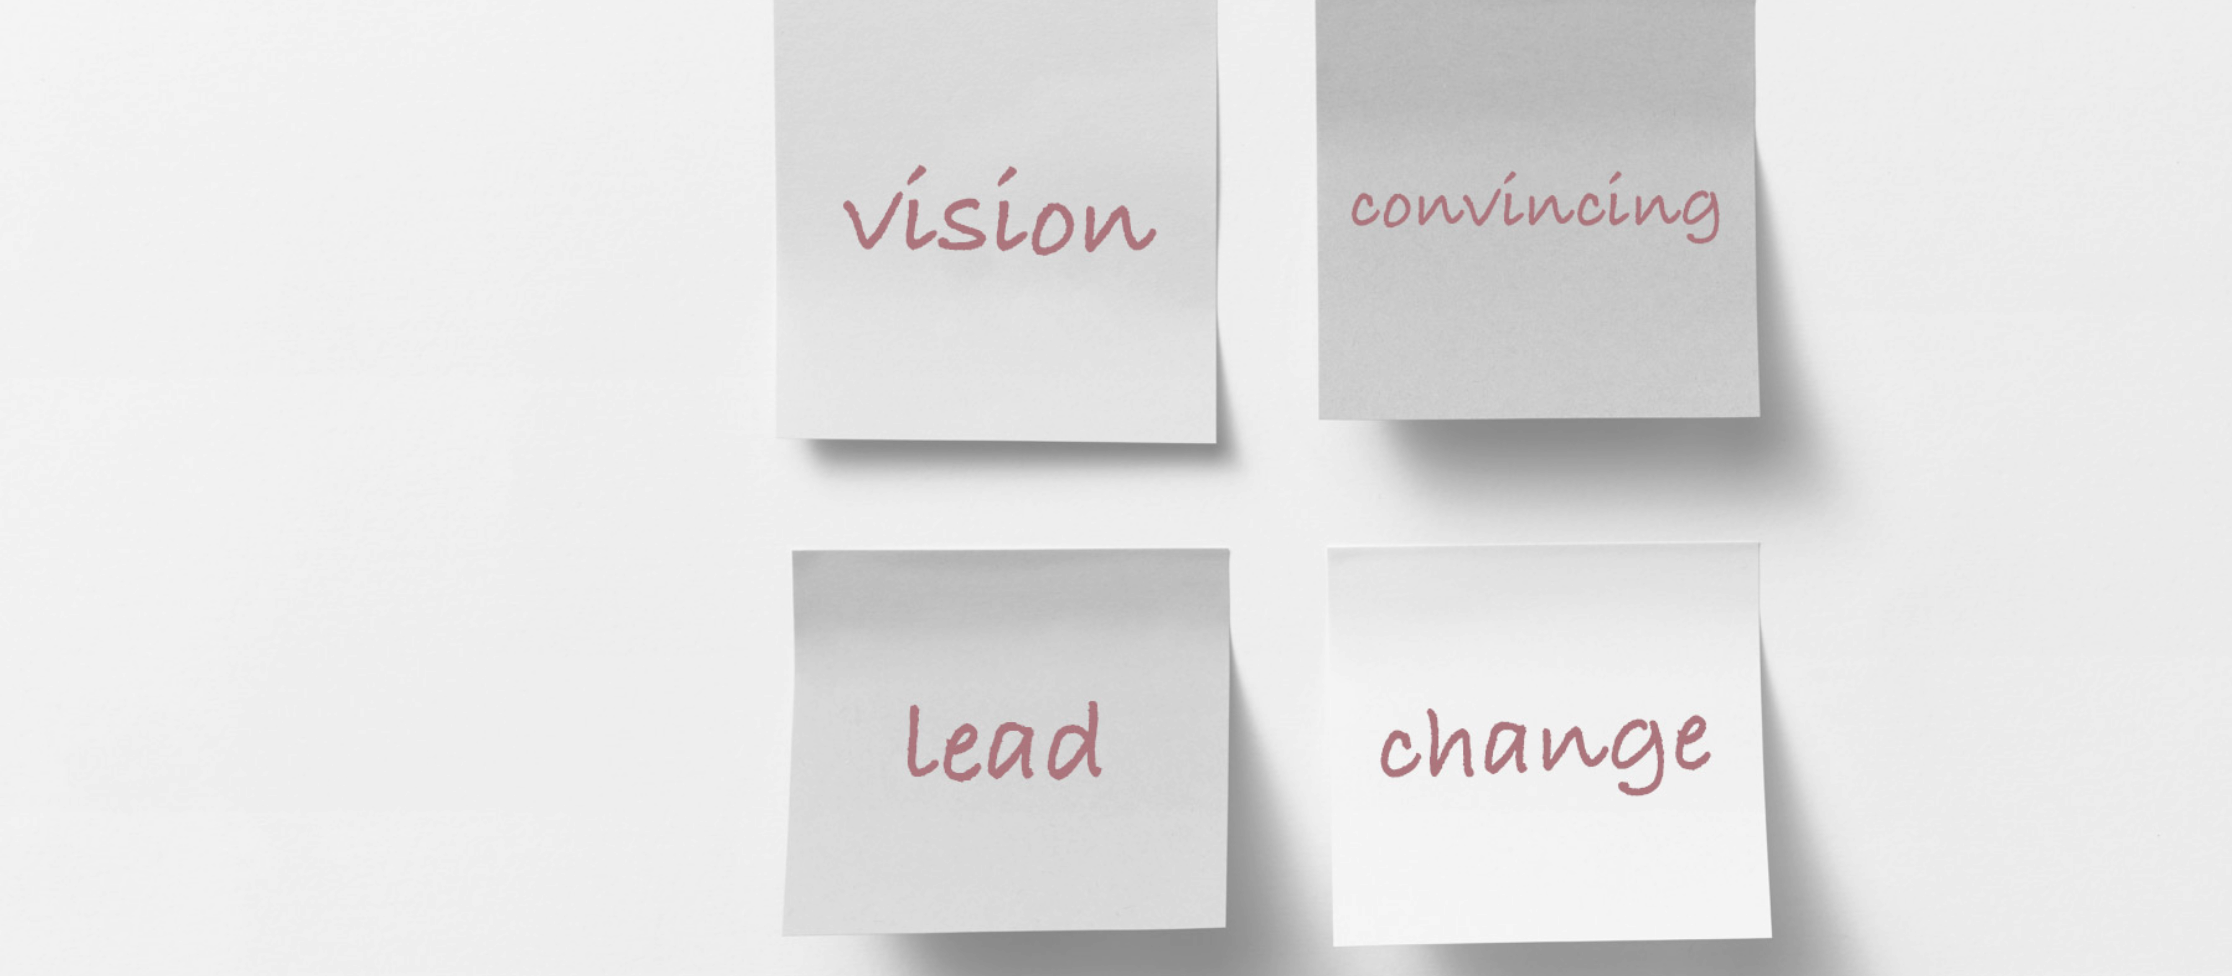 Leadership Coaching: Vision, lead, change, convincing